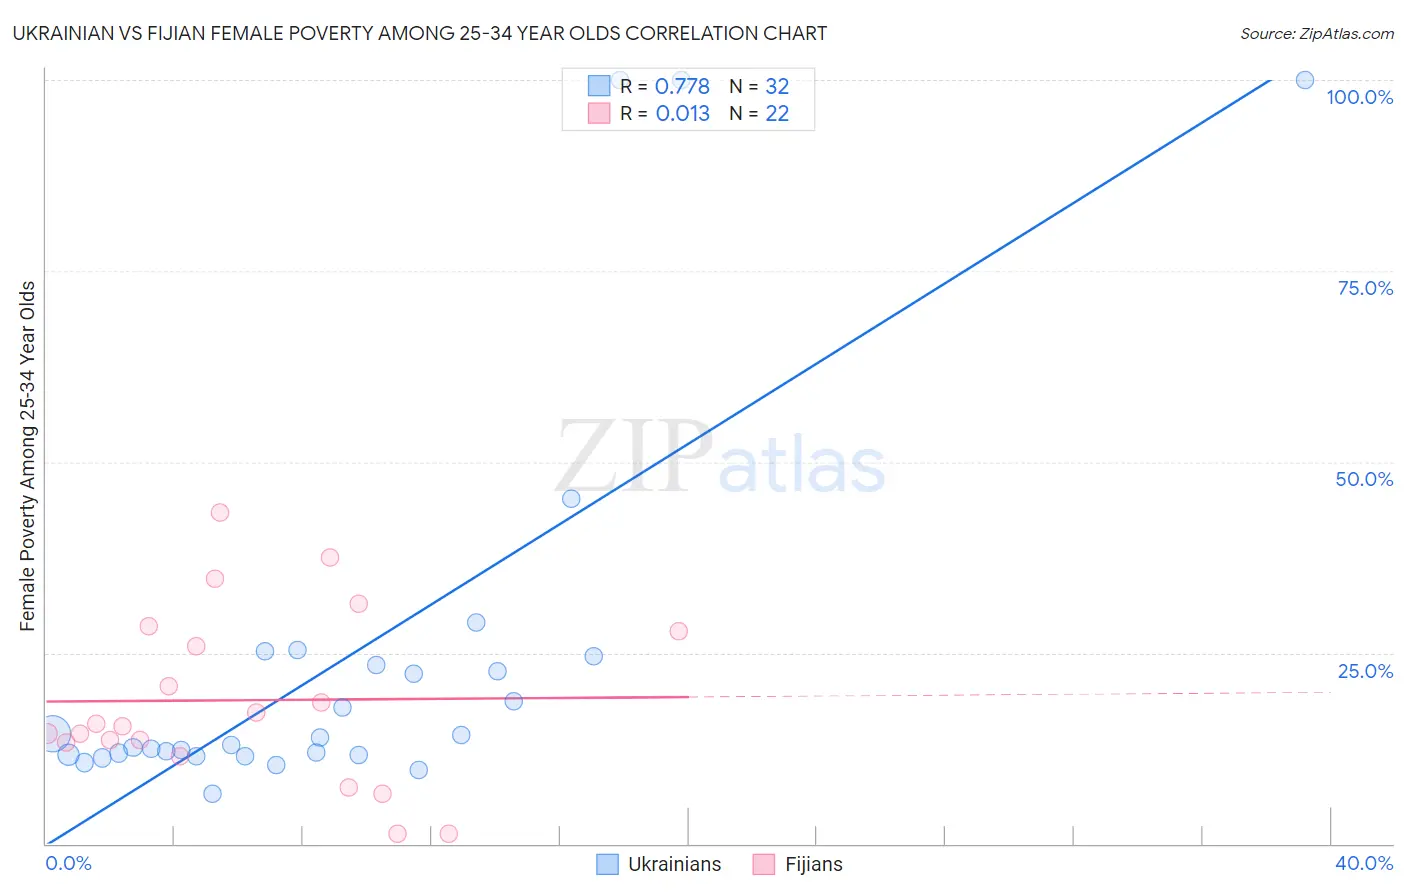 Ukrainian vs Fijian Female Poverty Among 25-34 Year Olds